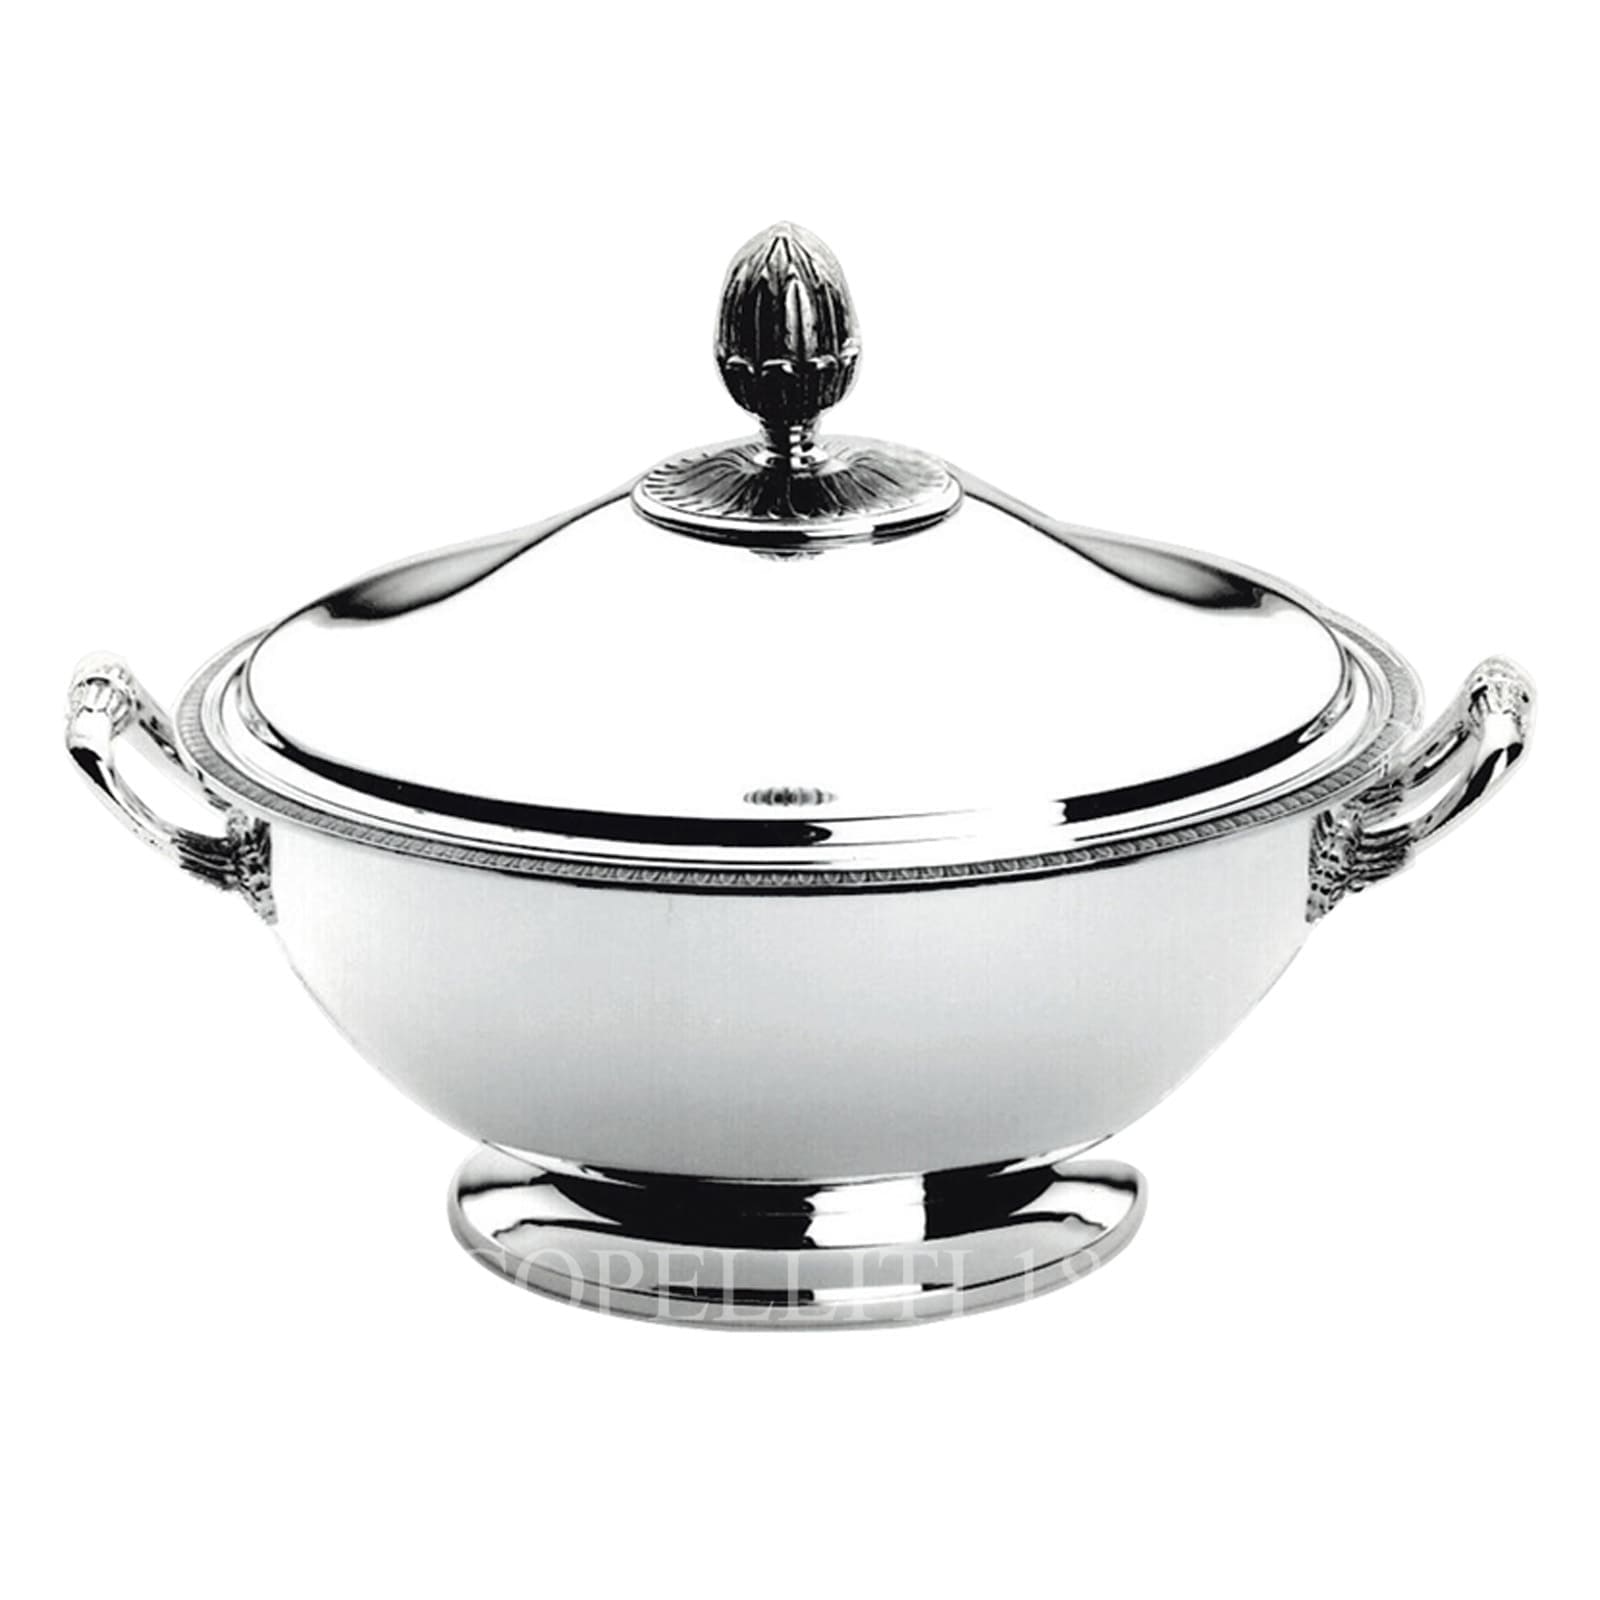 Christofle Malmaison Silver Plated Soup Tureen with lid